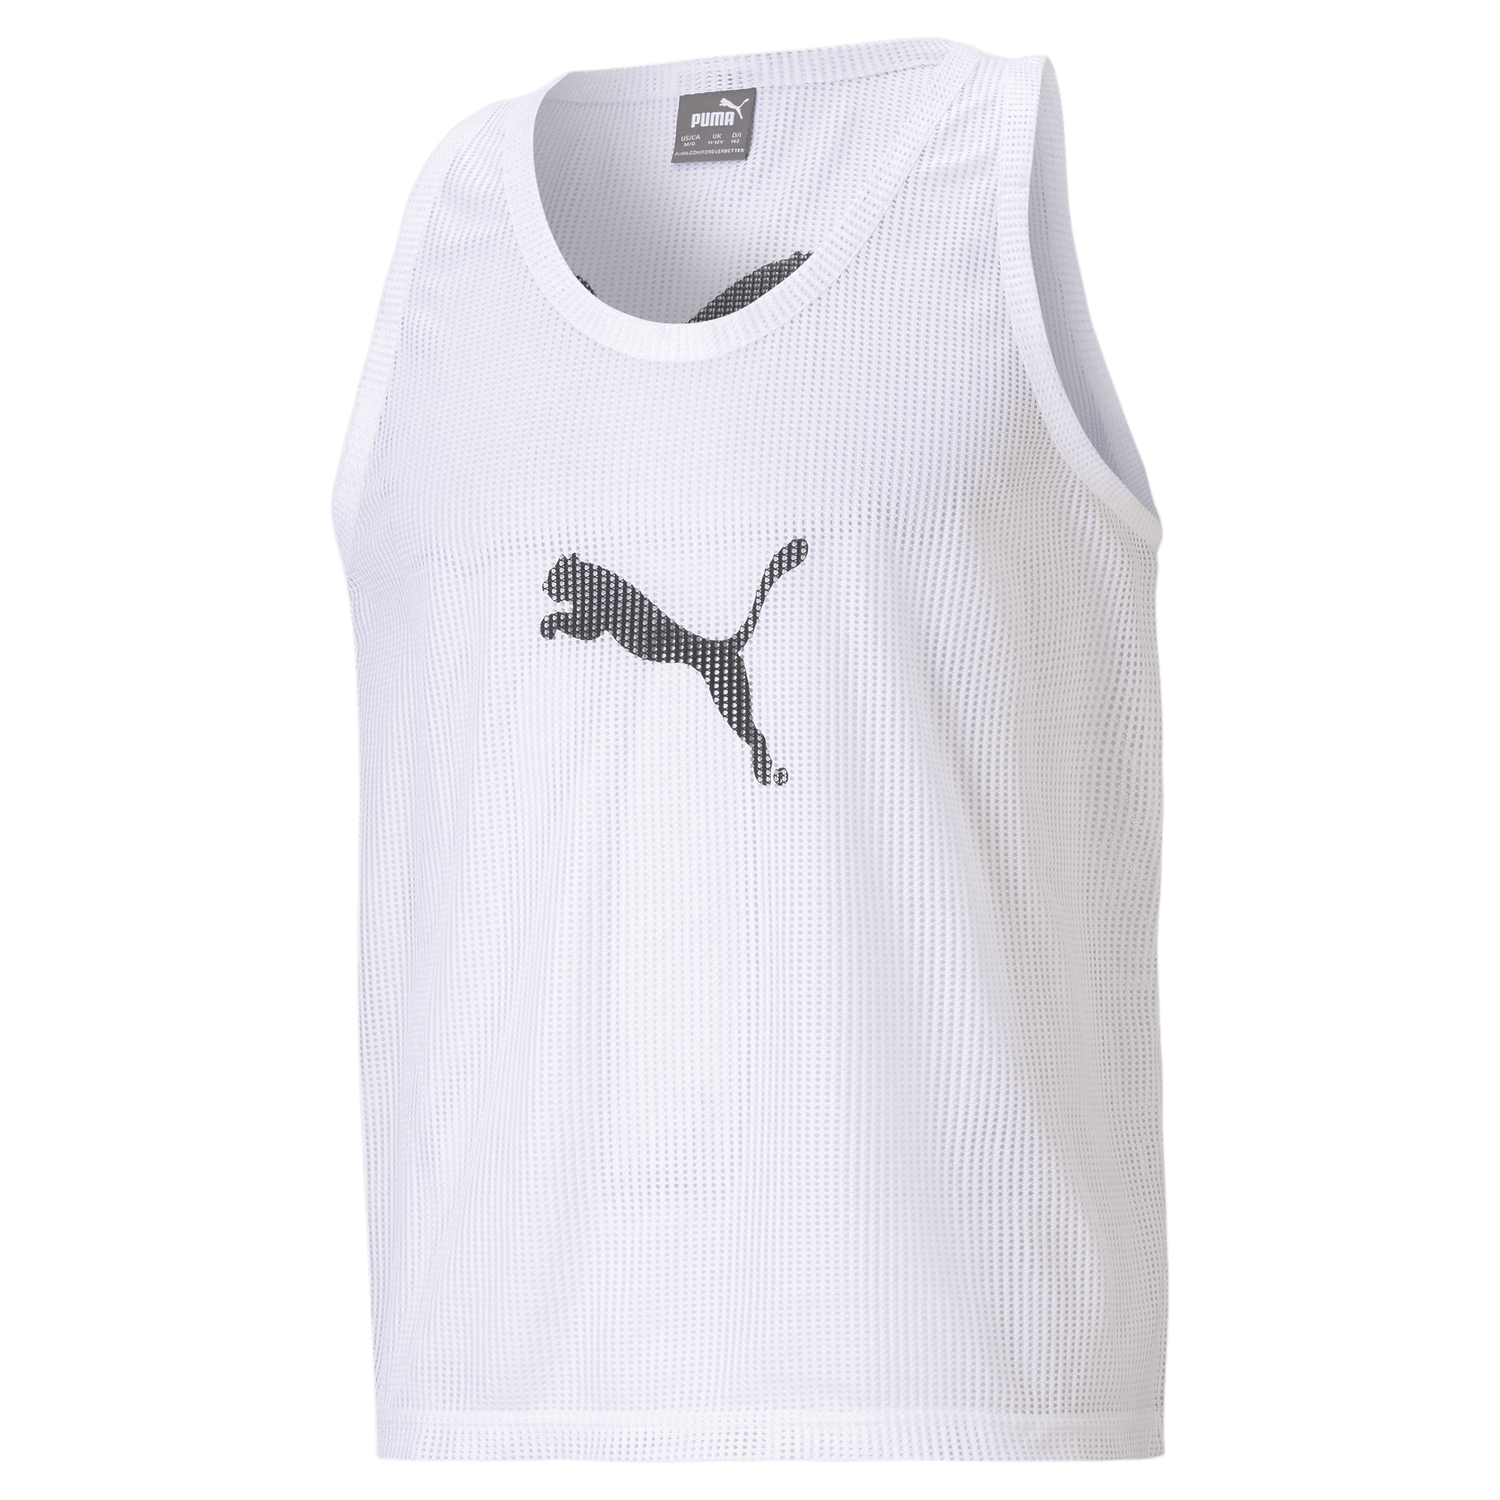 Puma Mens Training Vest White (Front)